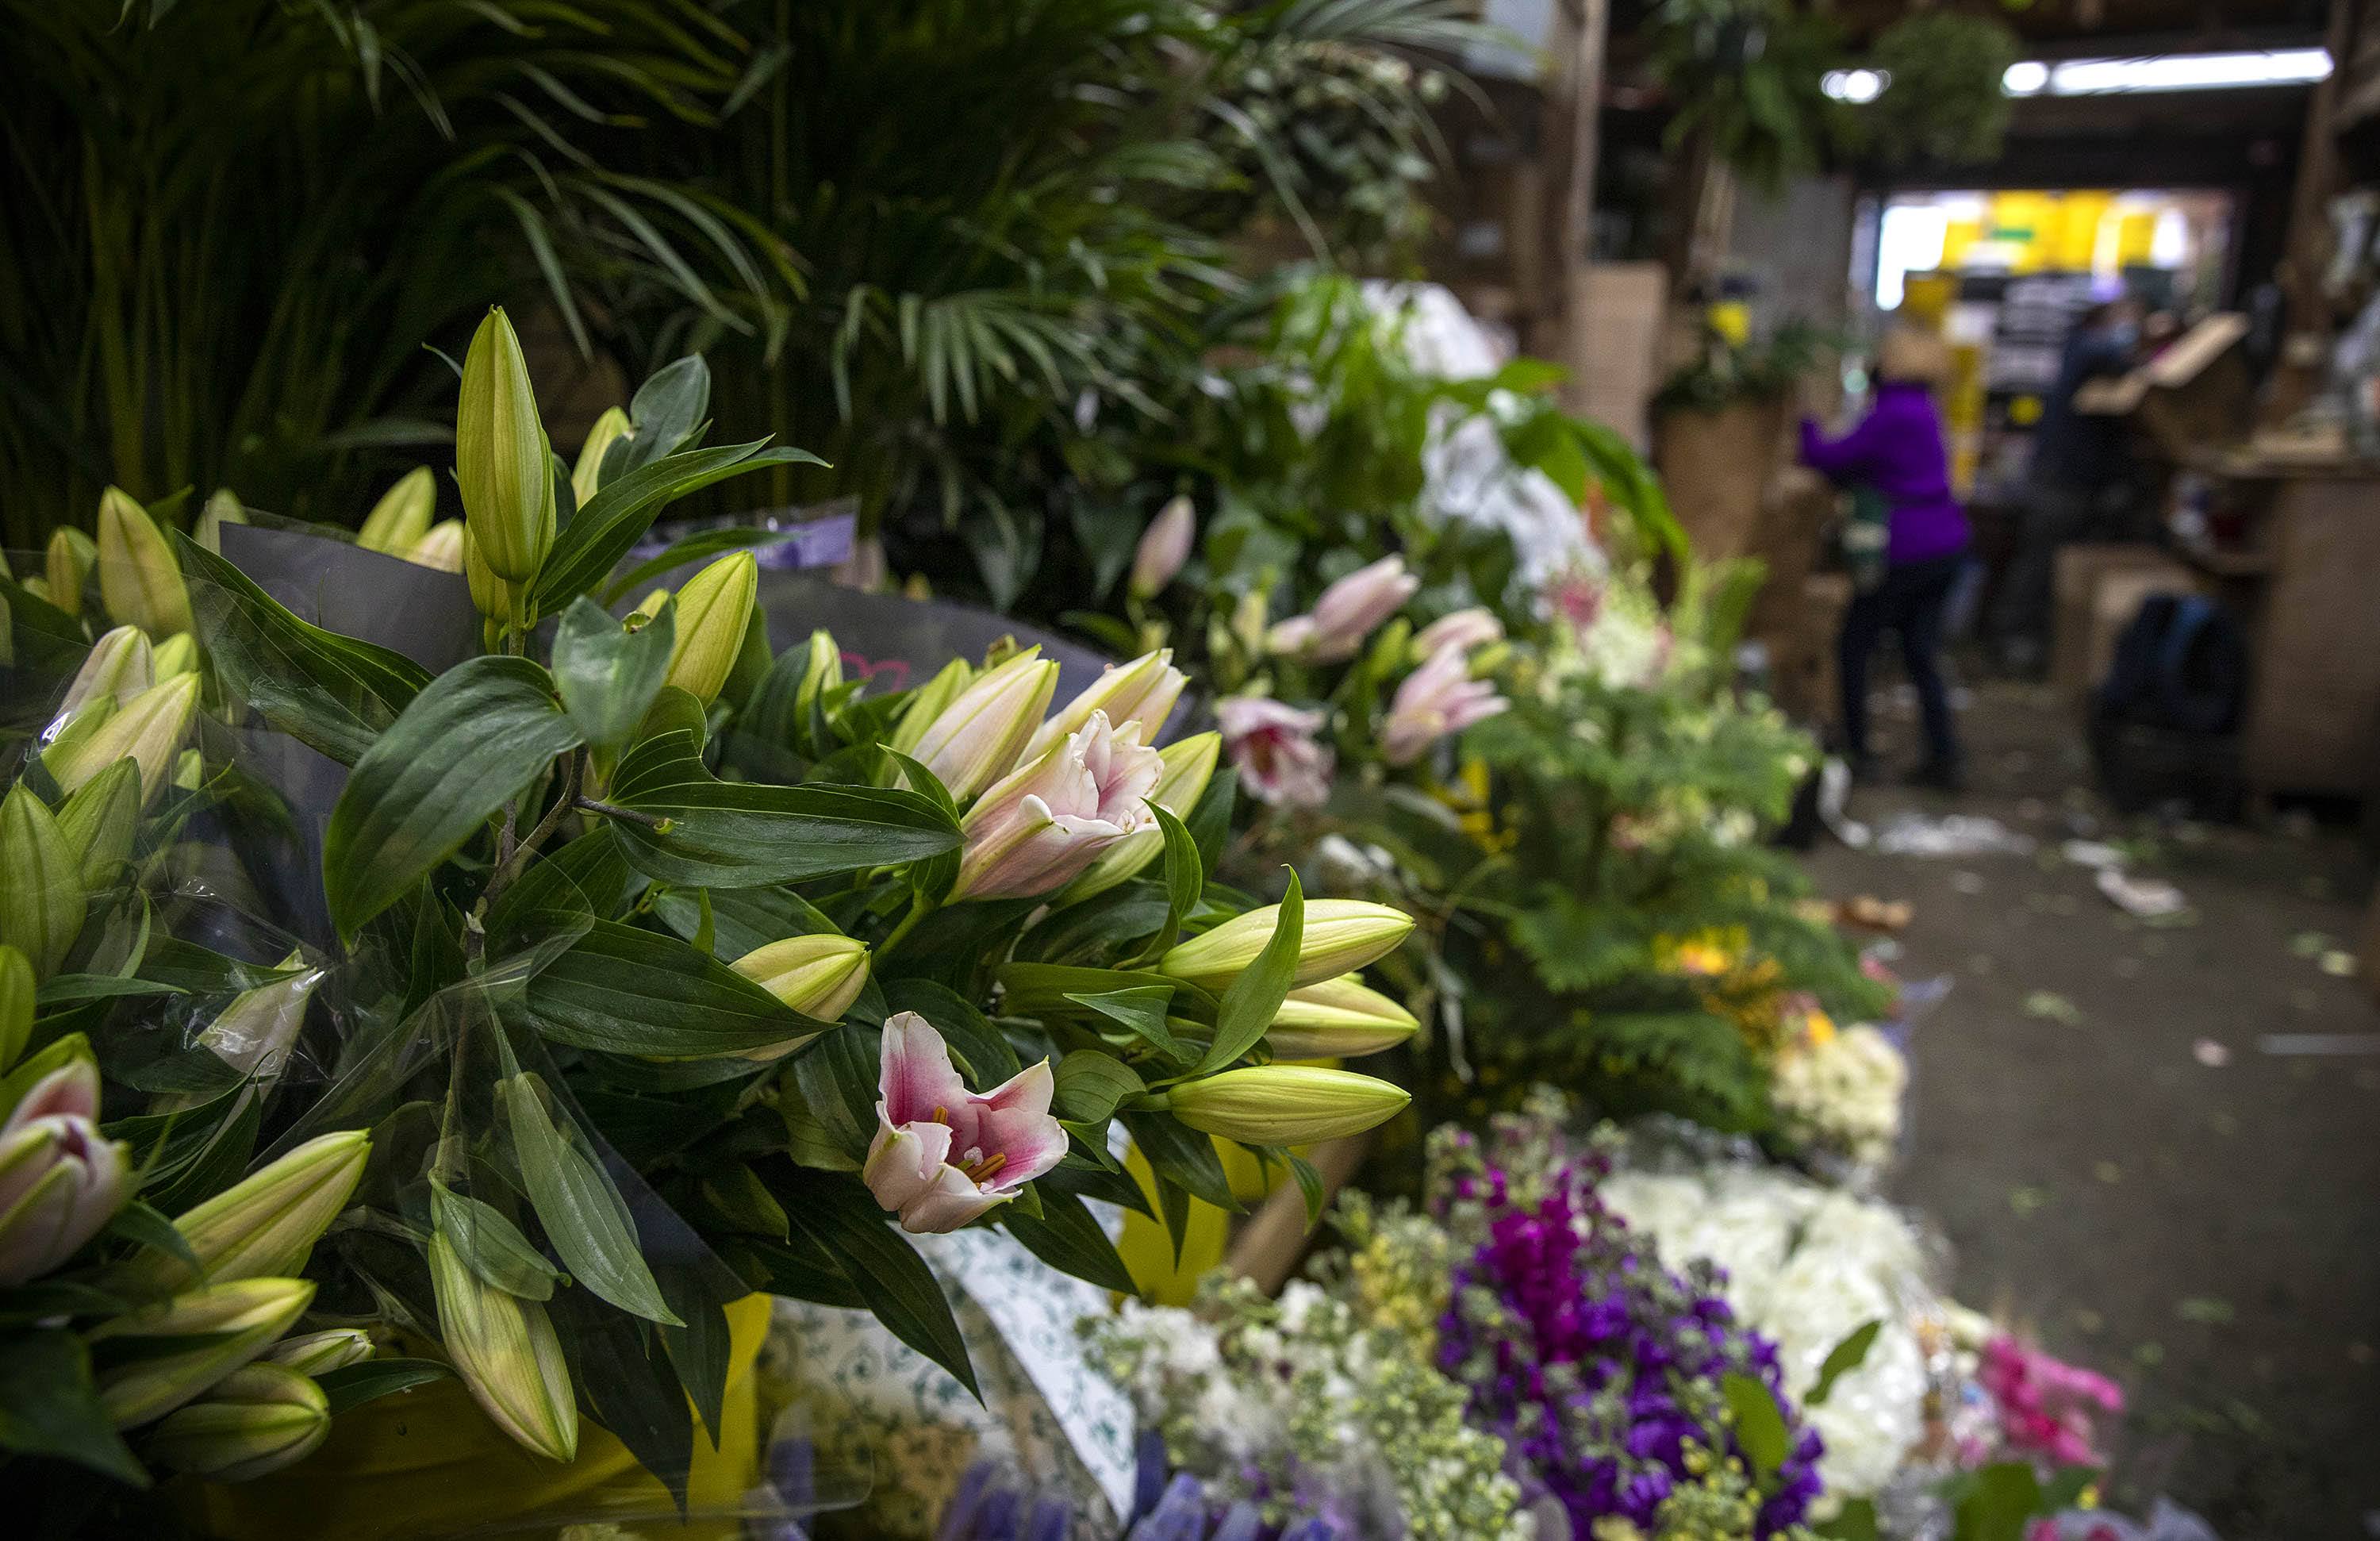 Flowers on display at Brattle Square Florist. (Robin Lubbock/WBUR)